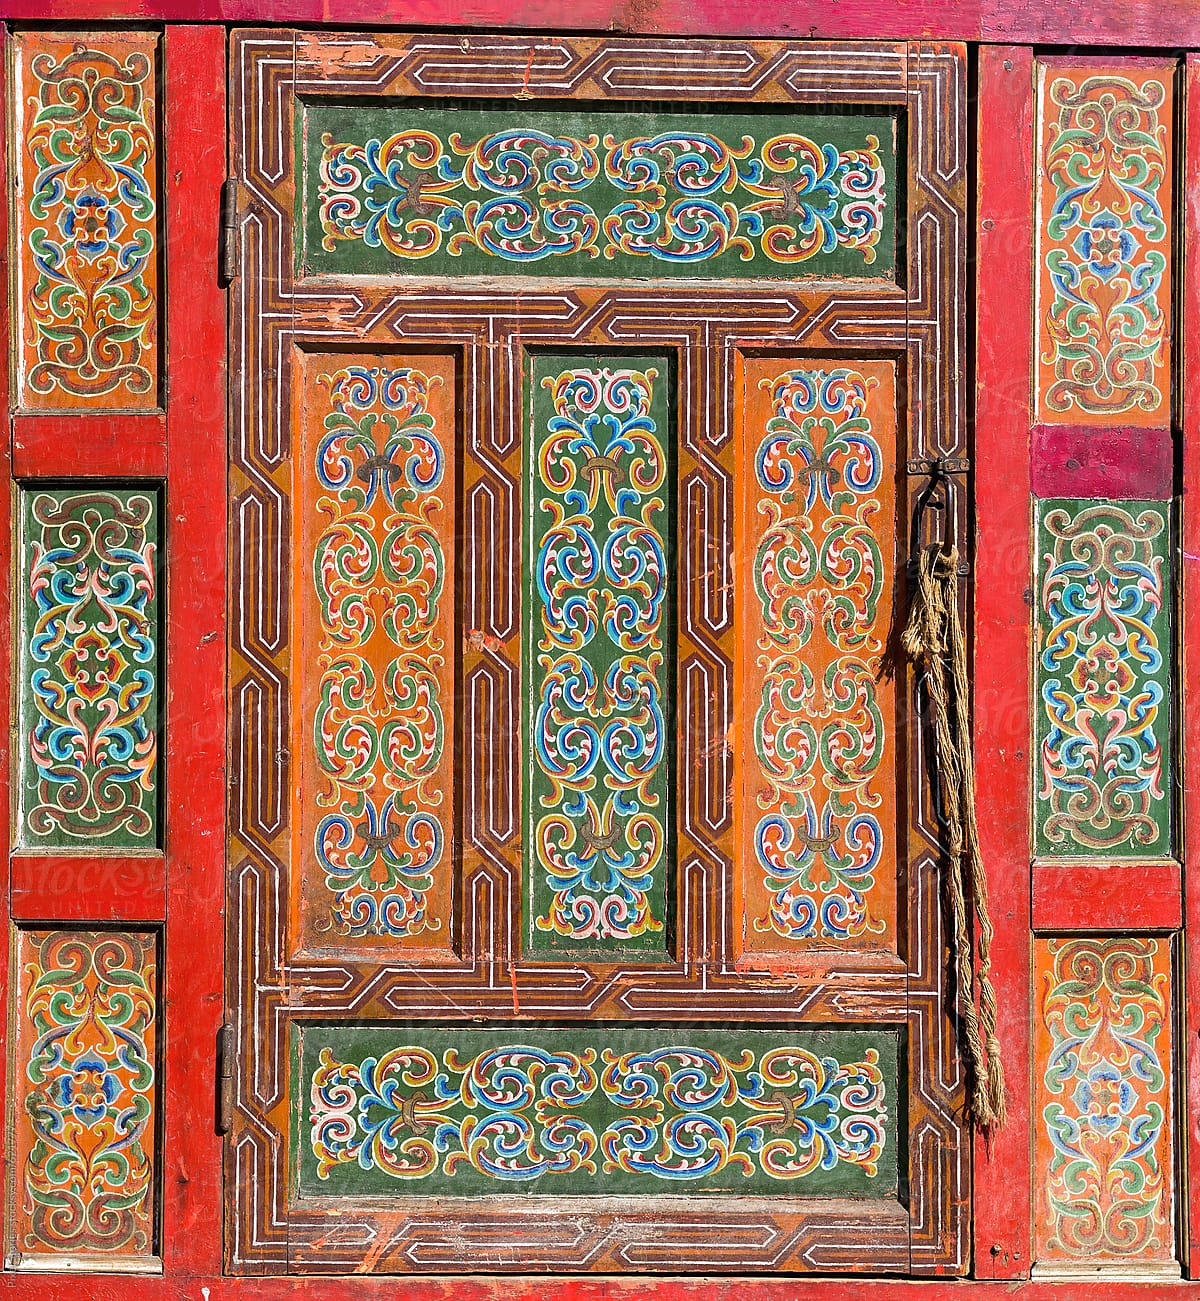 Intricately painted wooden door